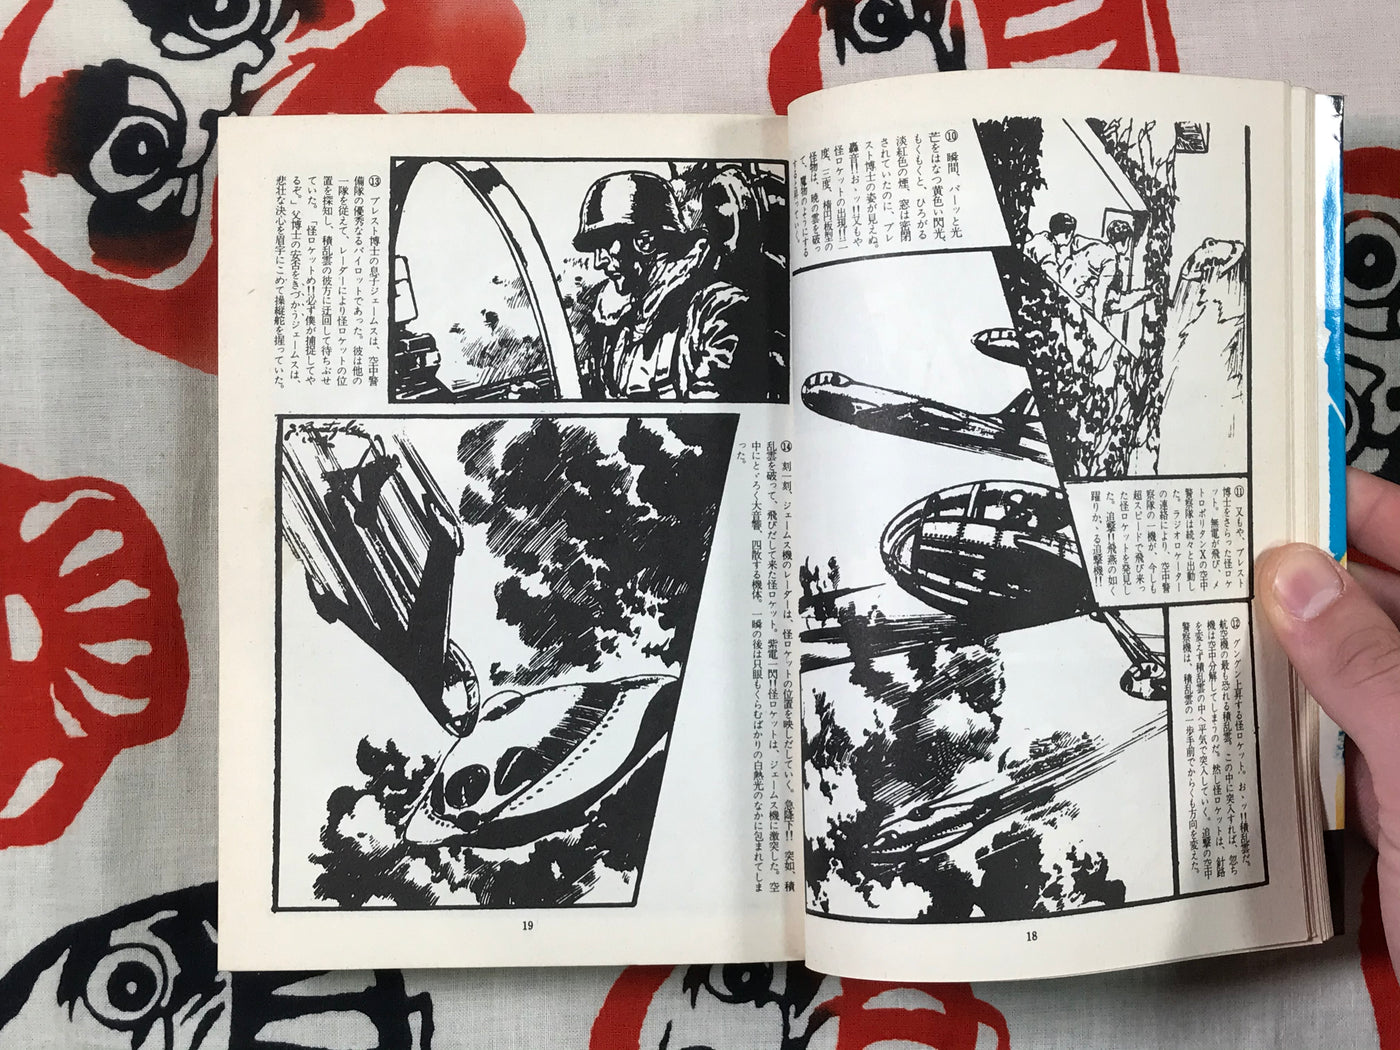 SOS Earth by Shigeru Komatsuzaki (1975)